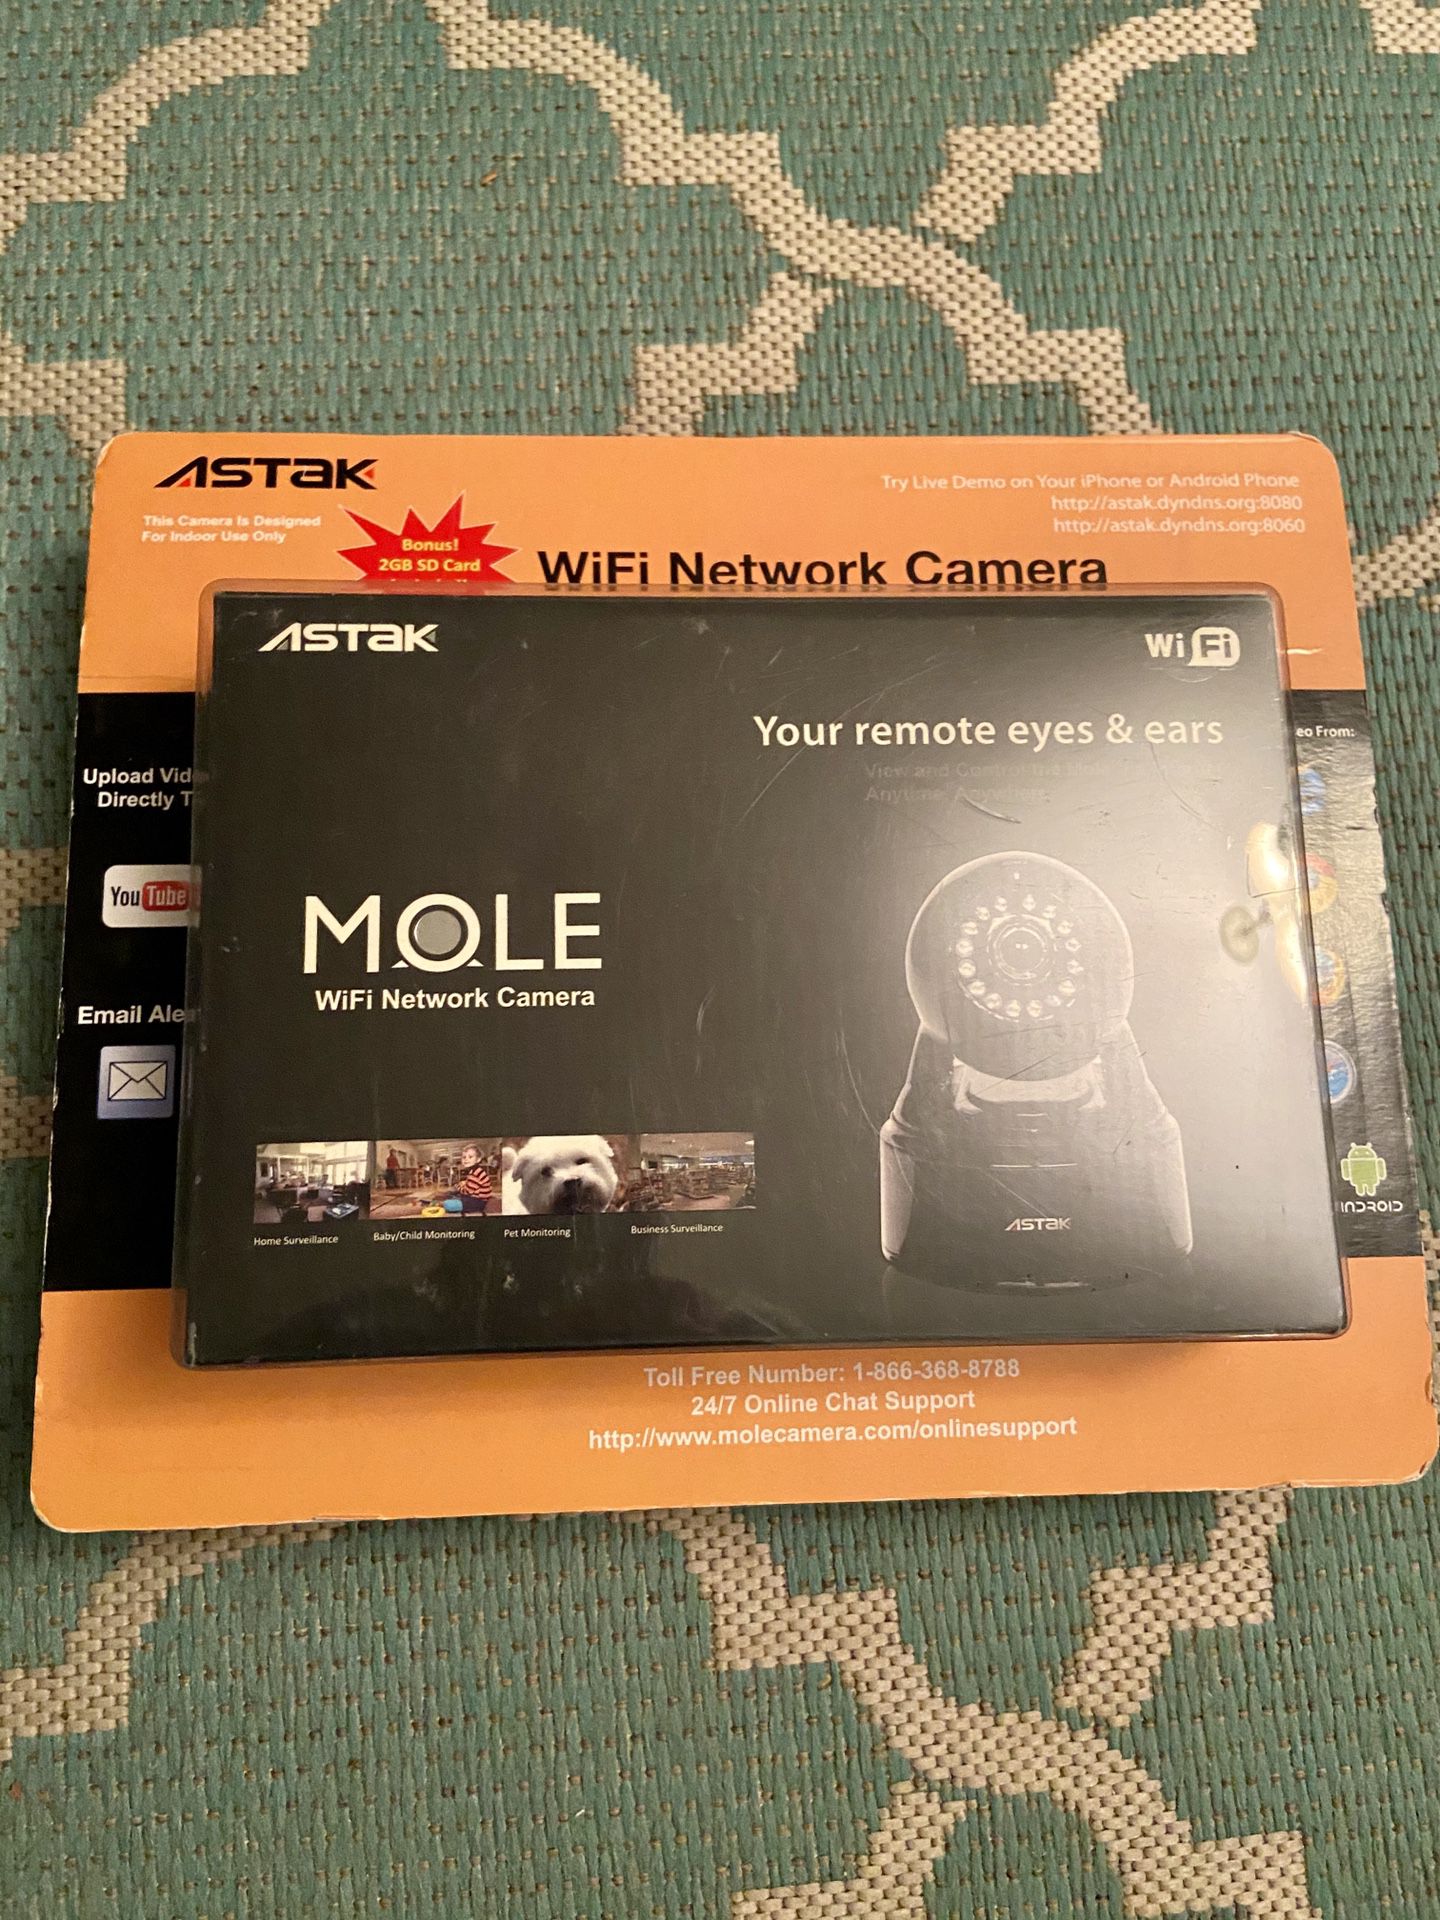 Astak MOLE home security camera